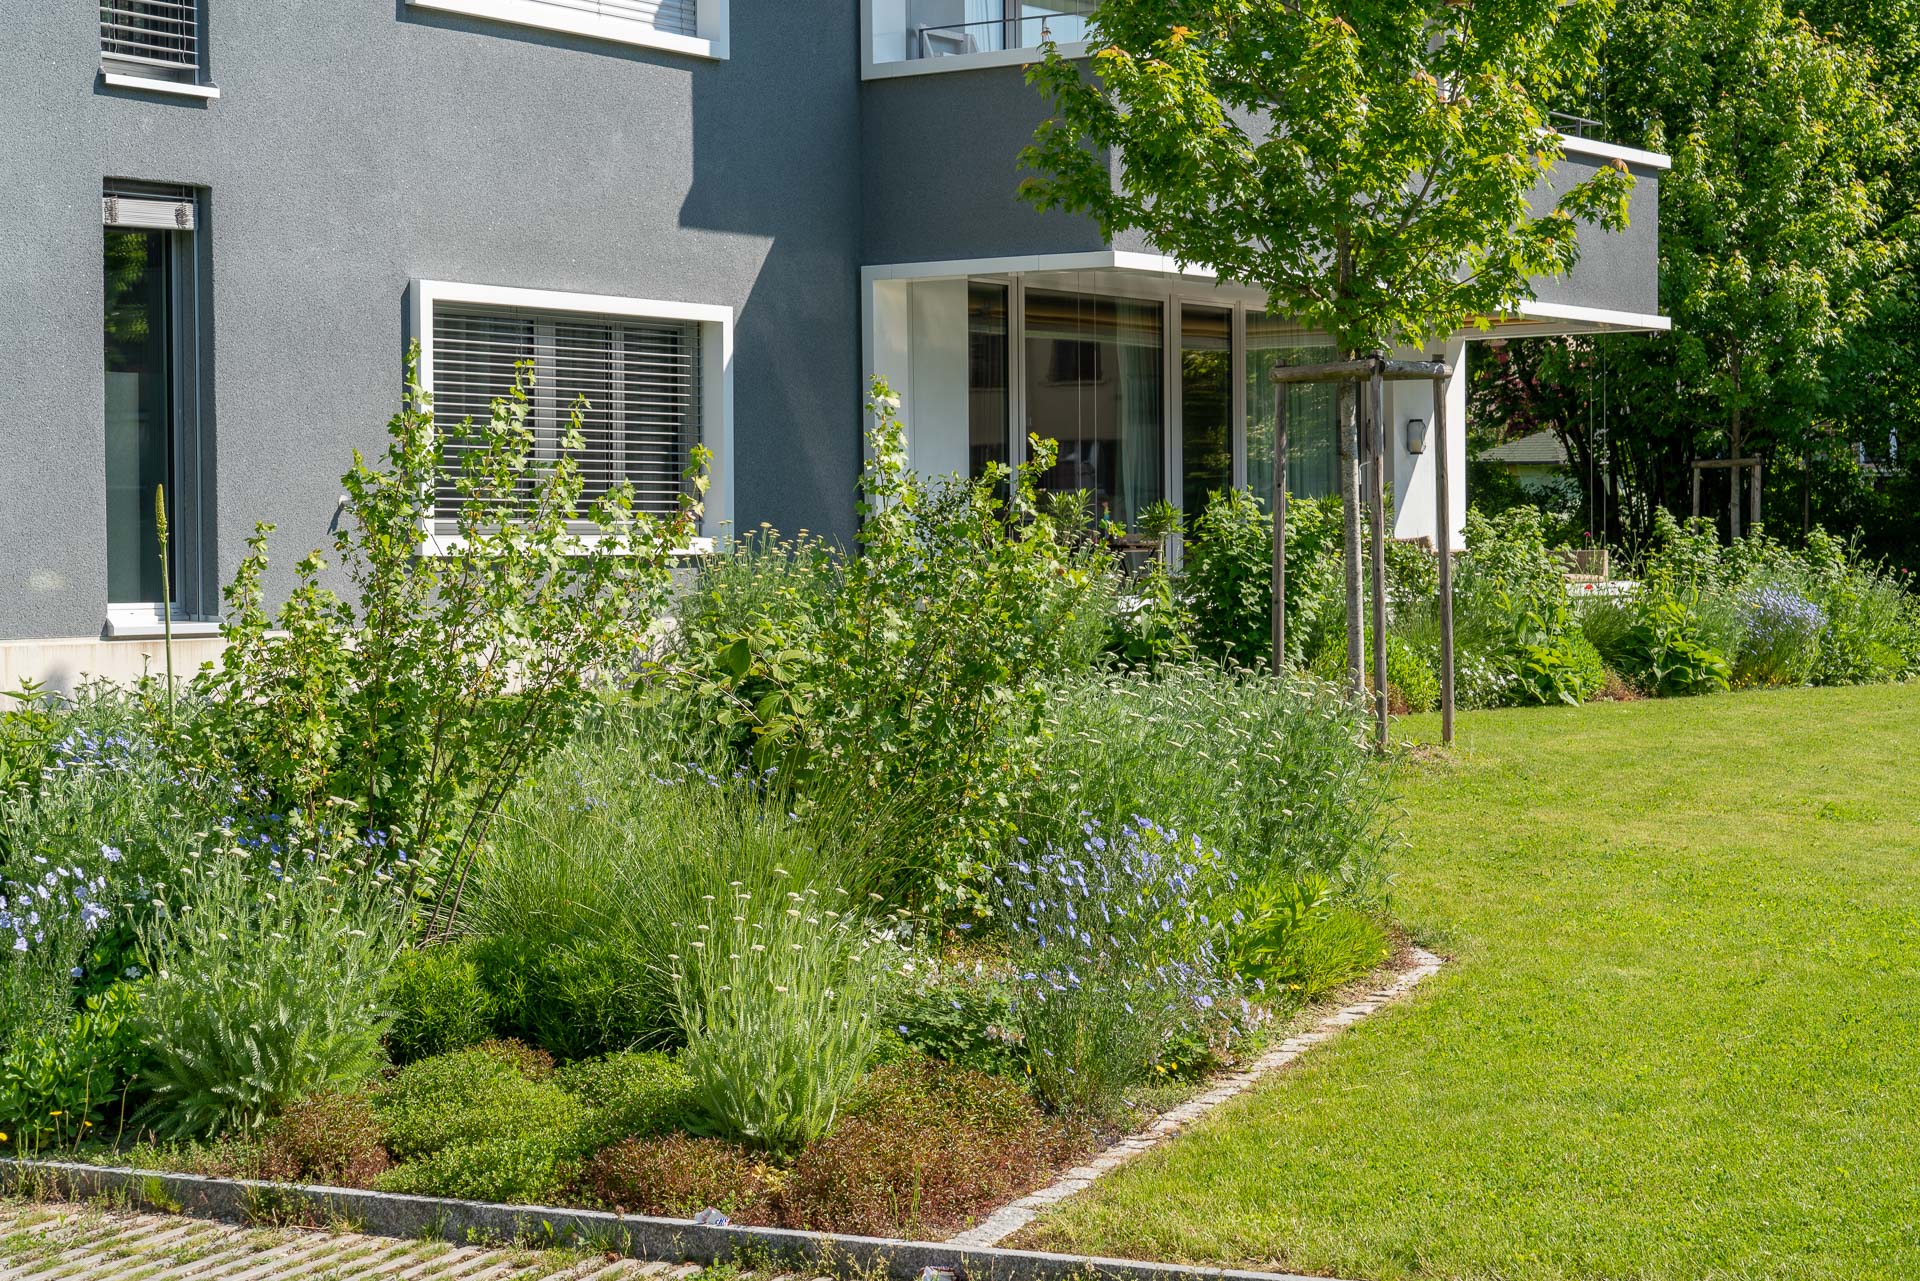 Umgebungsgestaltung Mehrfamilienhäuser - naturnahe Gestaltung